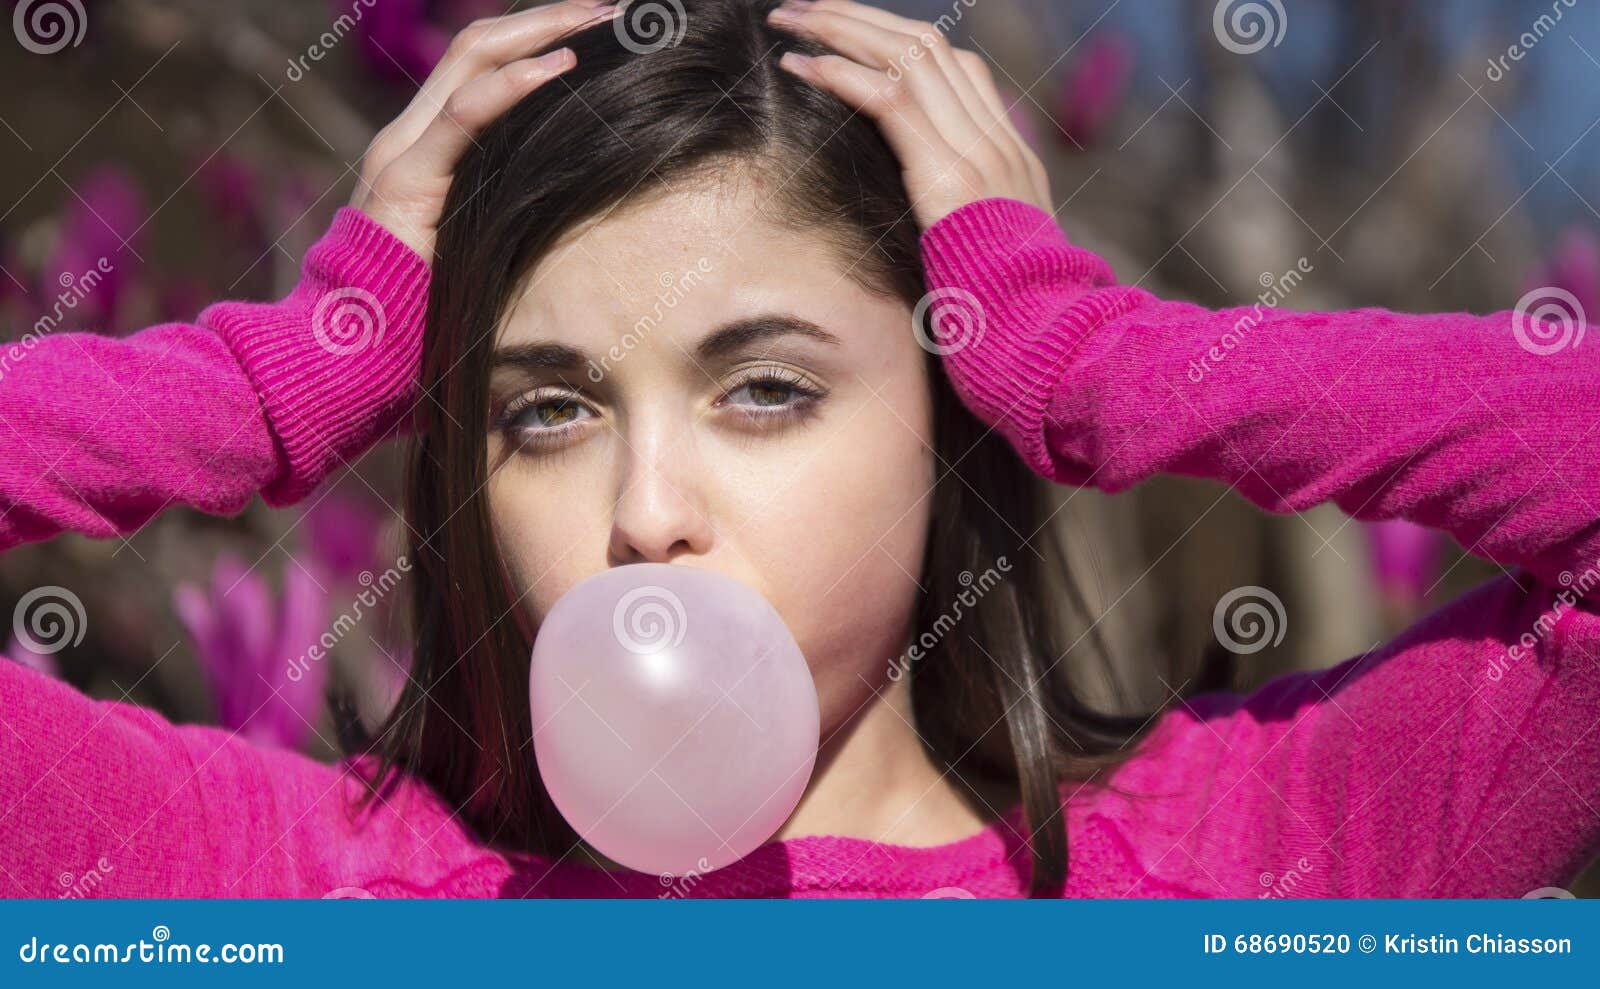 Girls bubble gum shower story sex